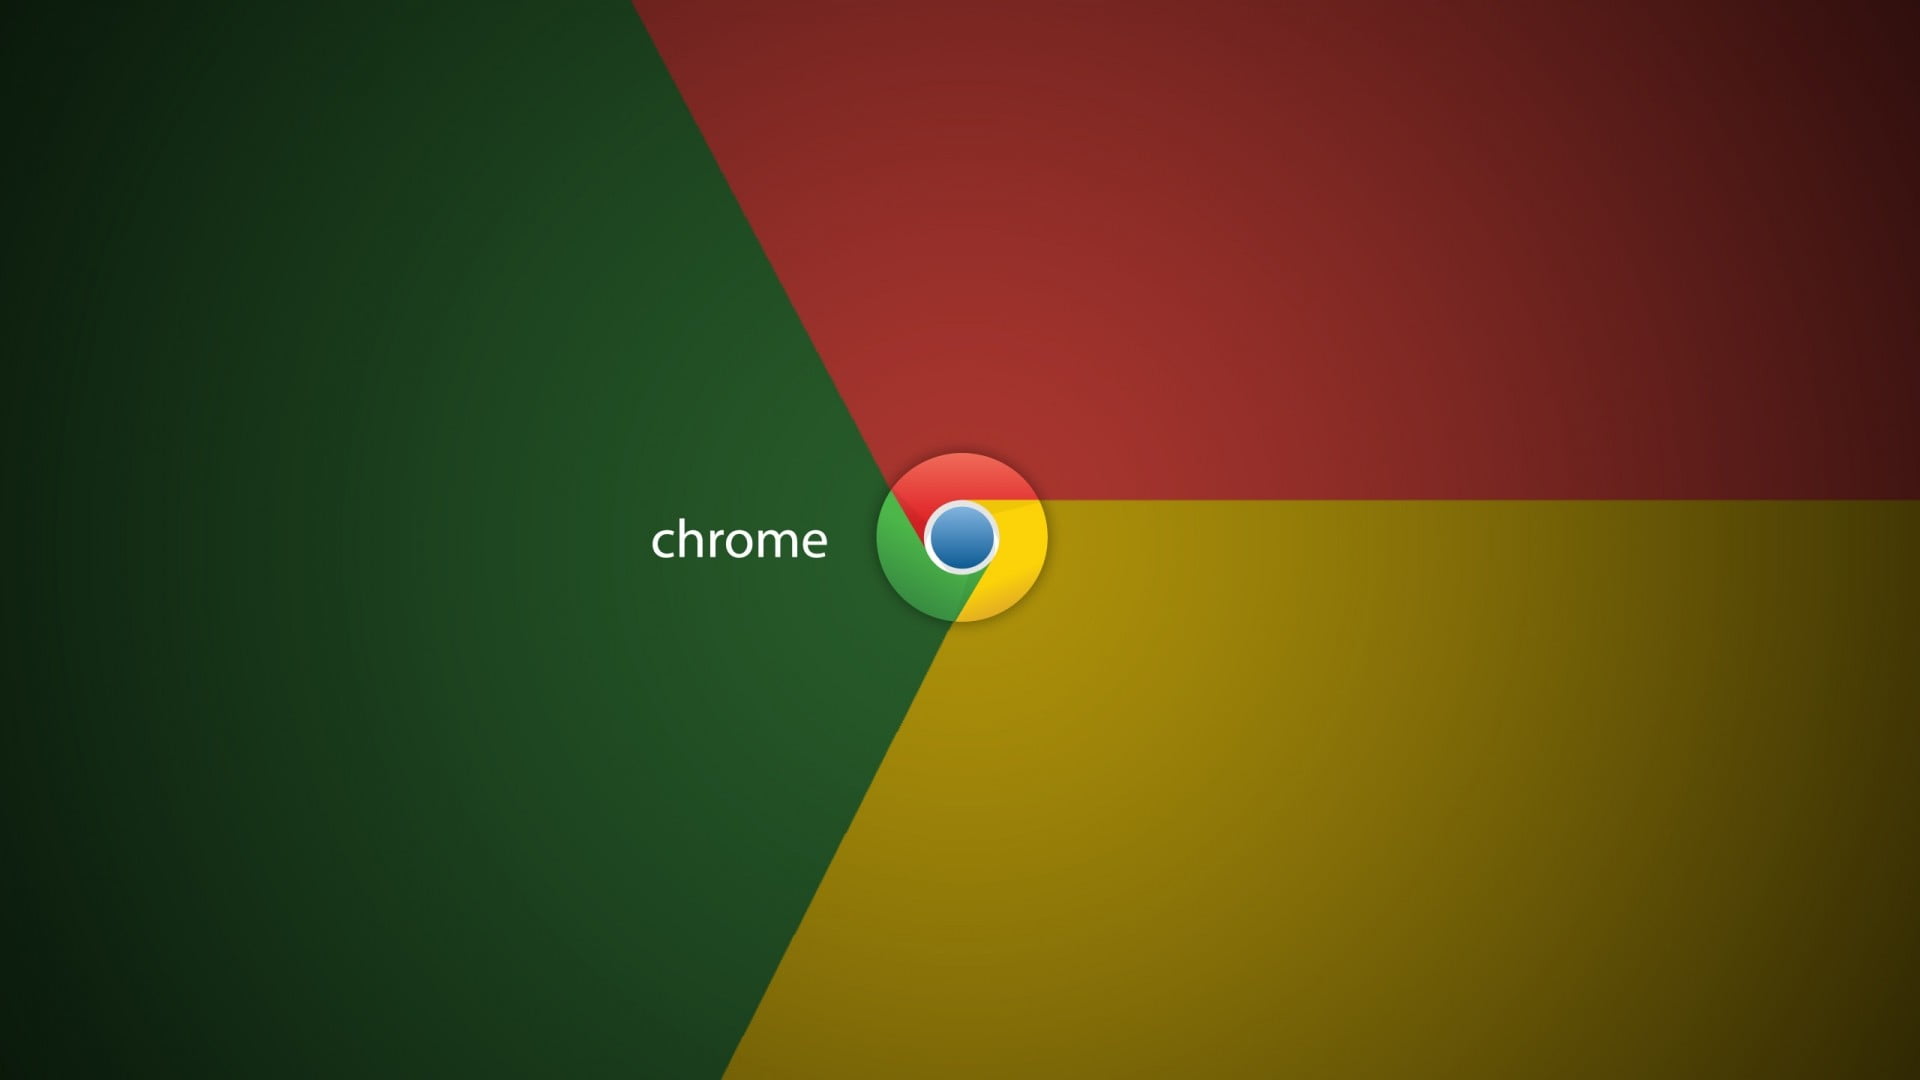 Google Chrome, Browser, internet, logo, green, red, yellow